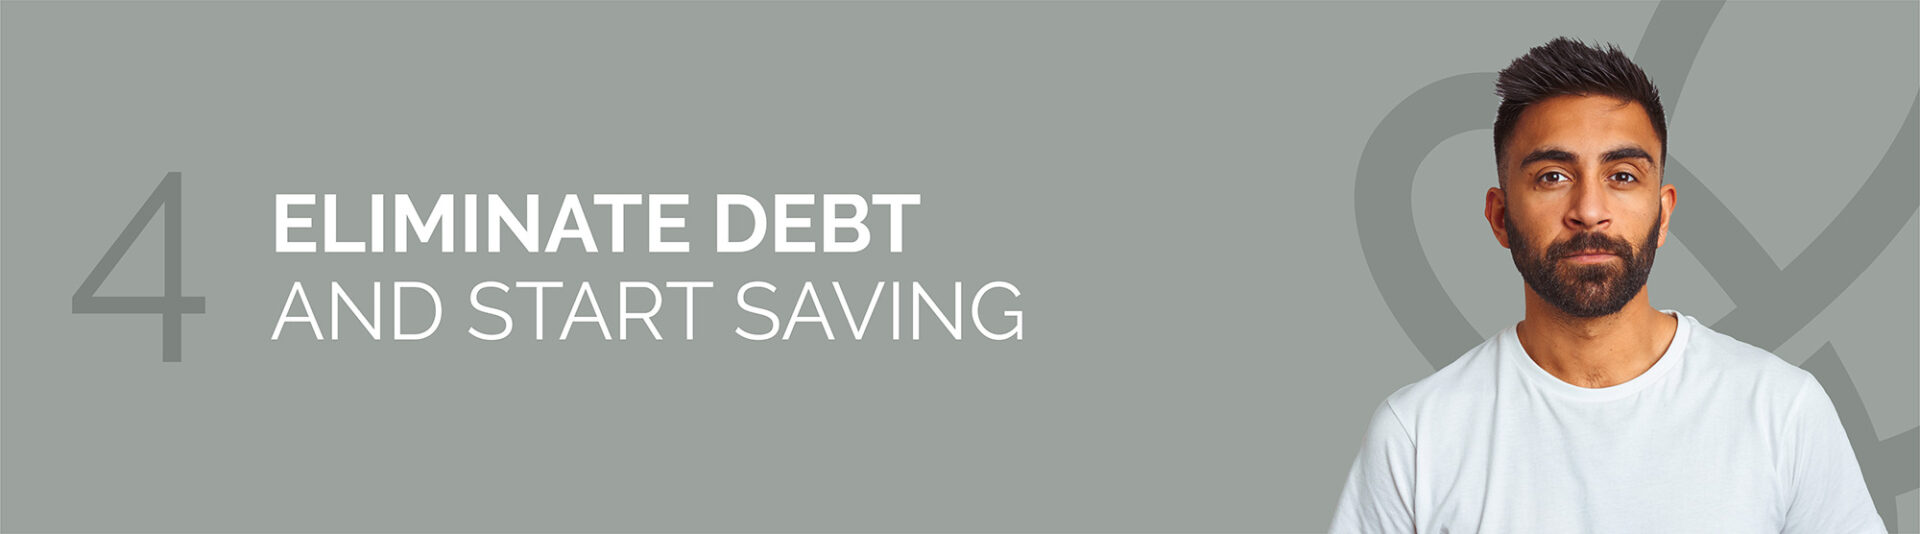 4-Eliminate Debt